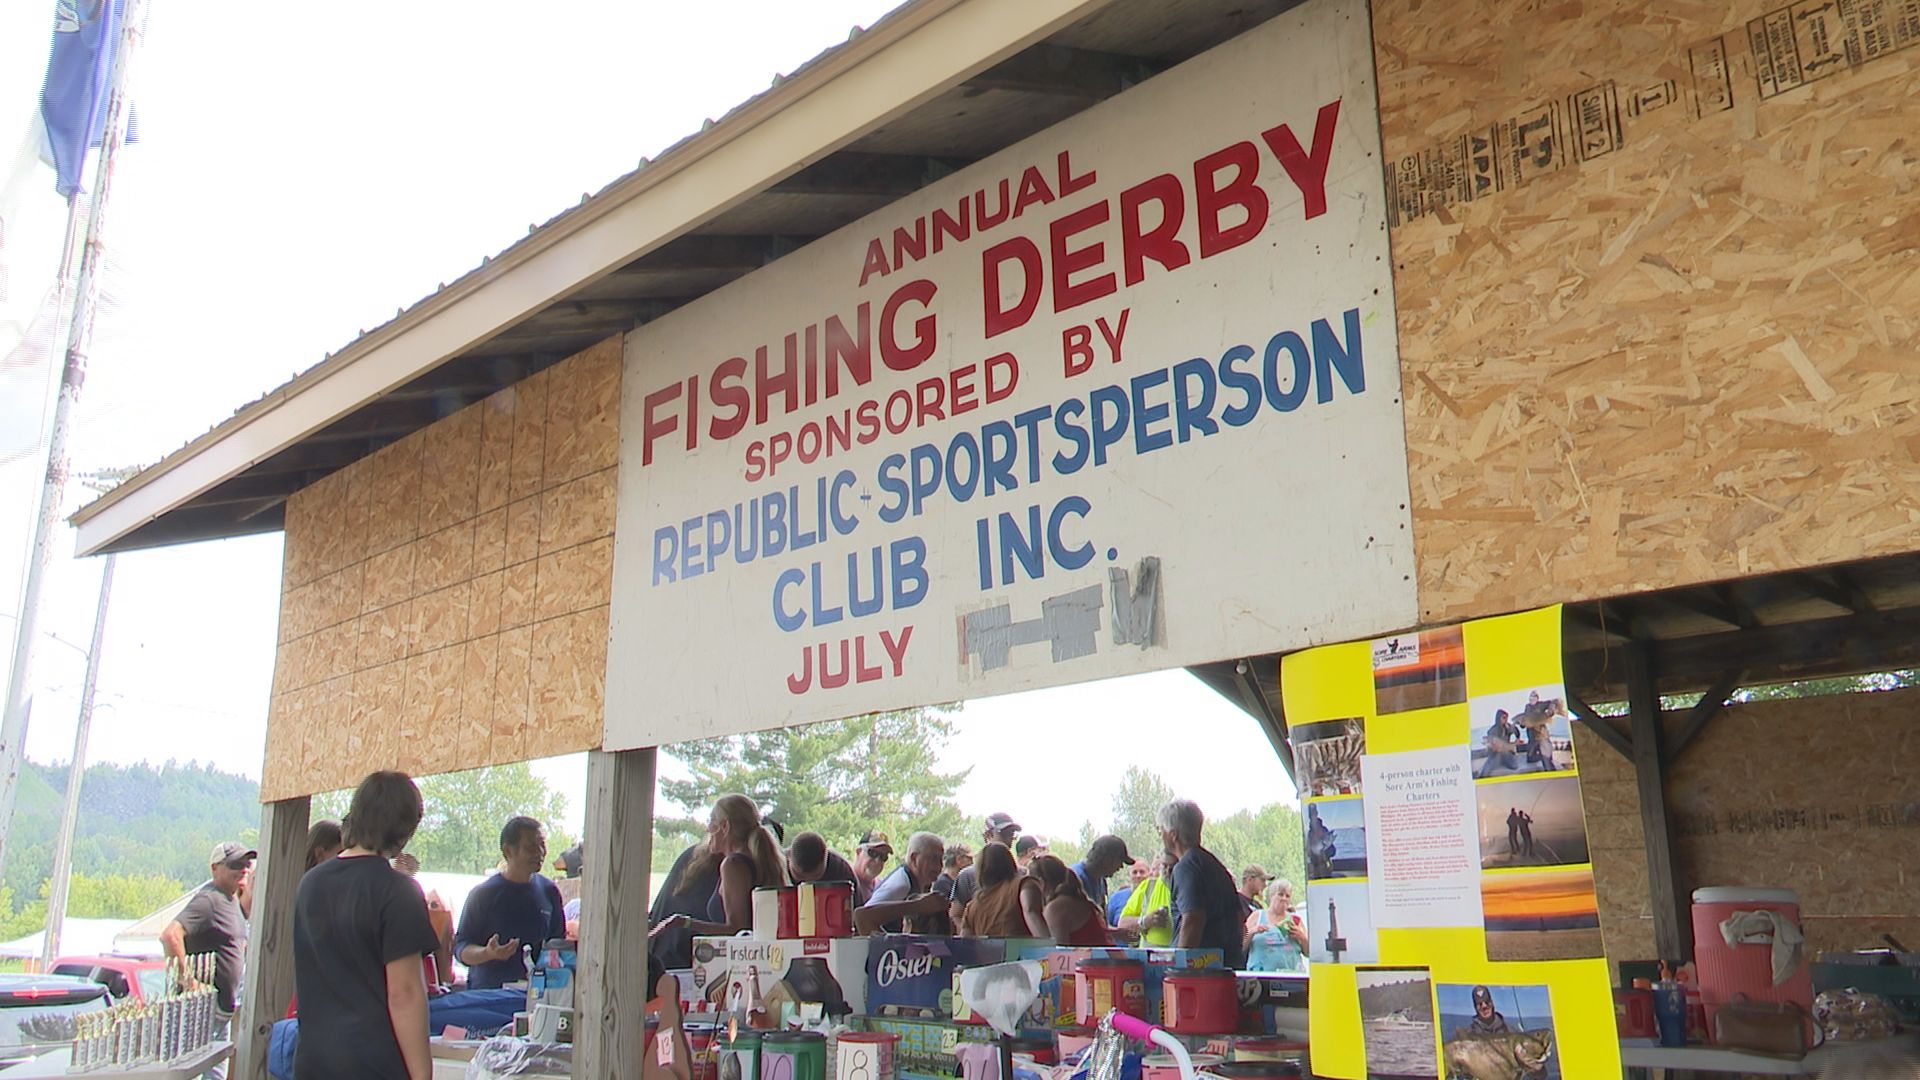 Republic Sportsman's Club wraps up 33rd Annual Fishing Derby